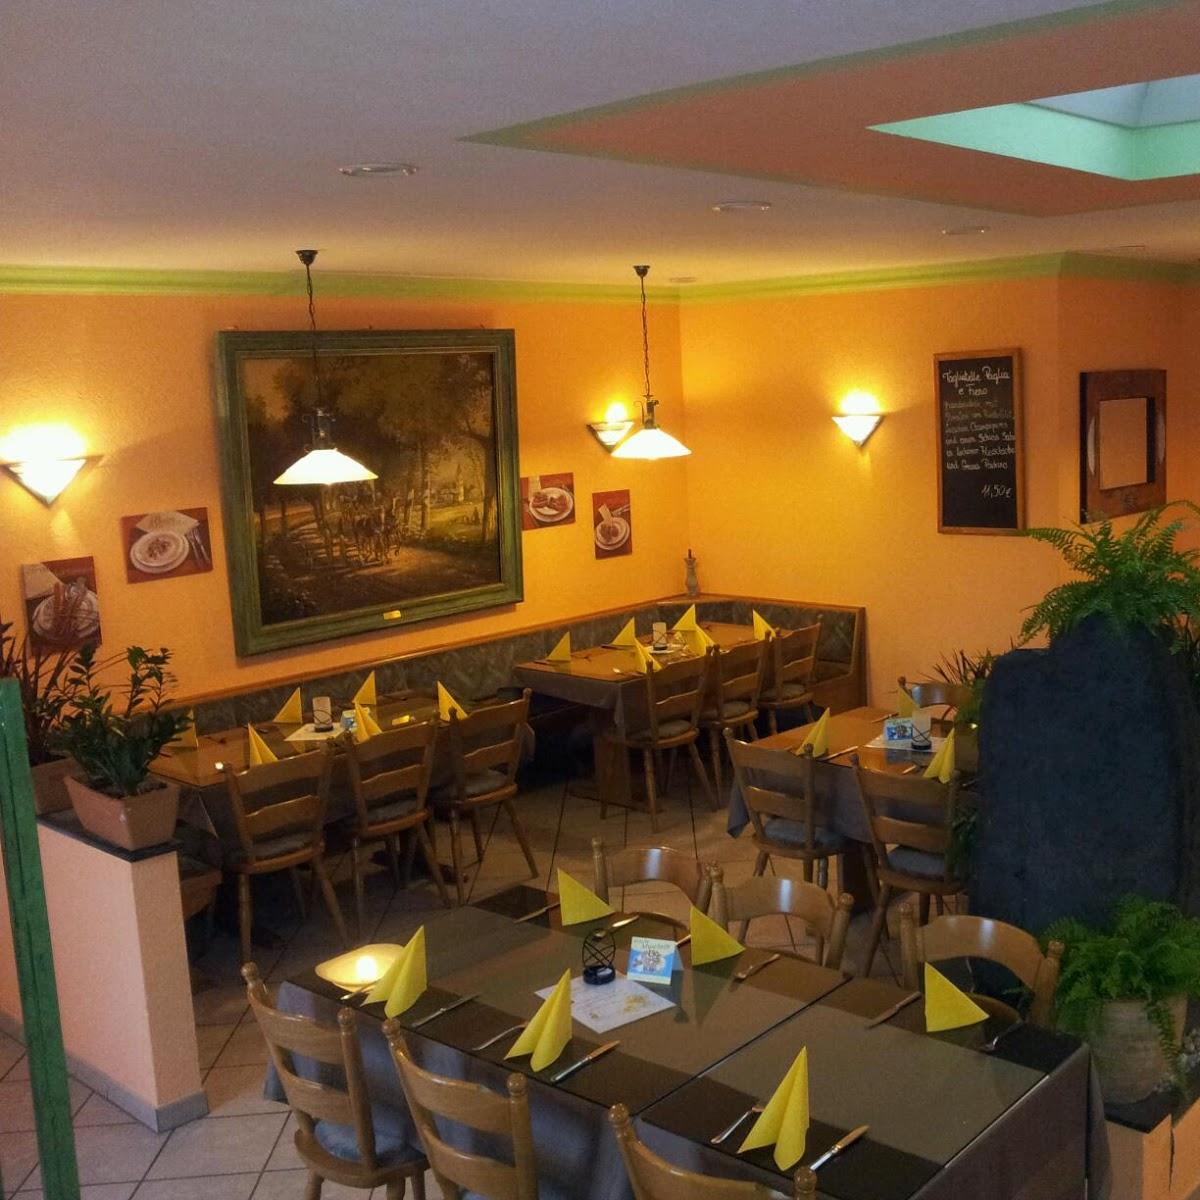 Restaurant "La Terrazza" in Mehren